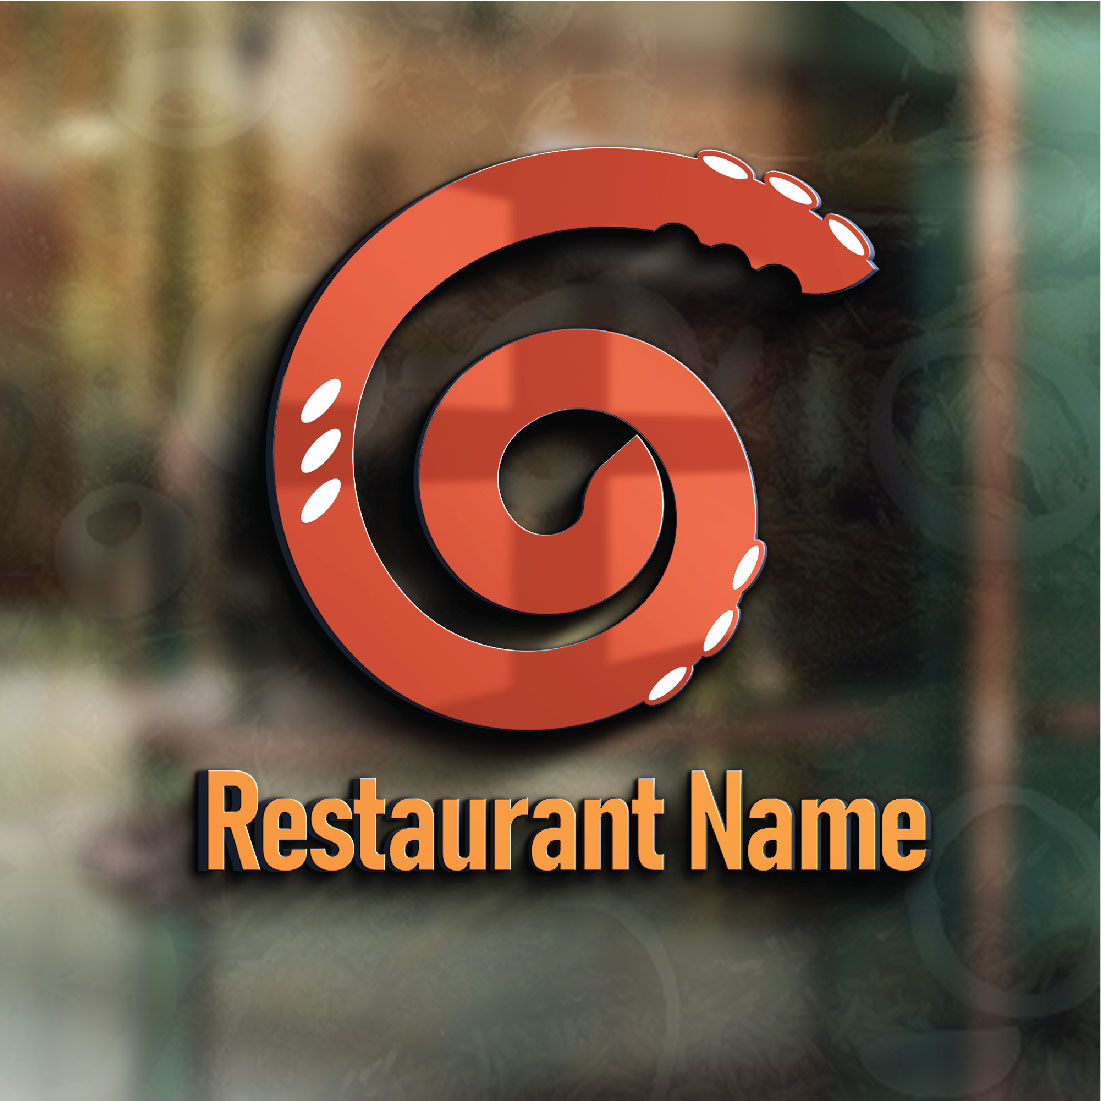 Restaurant logo preview image.